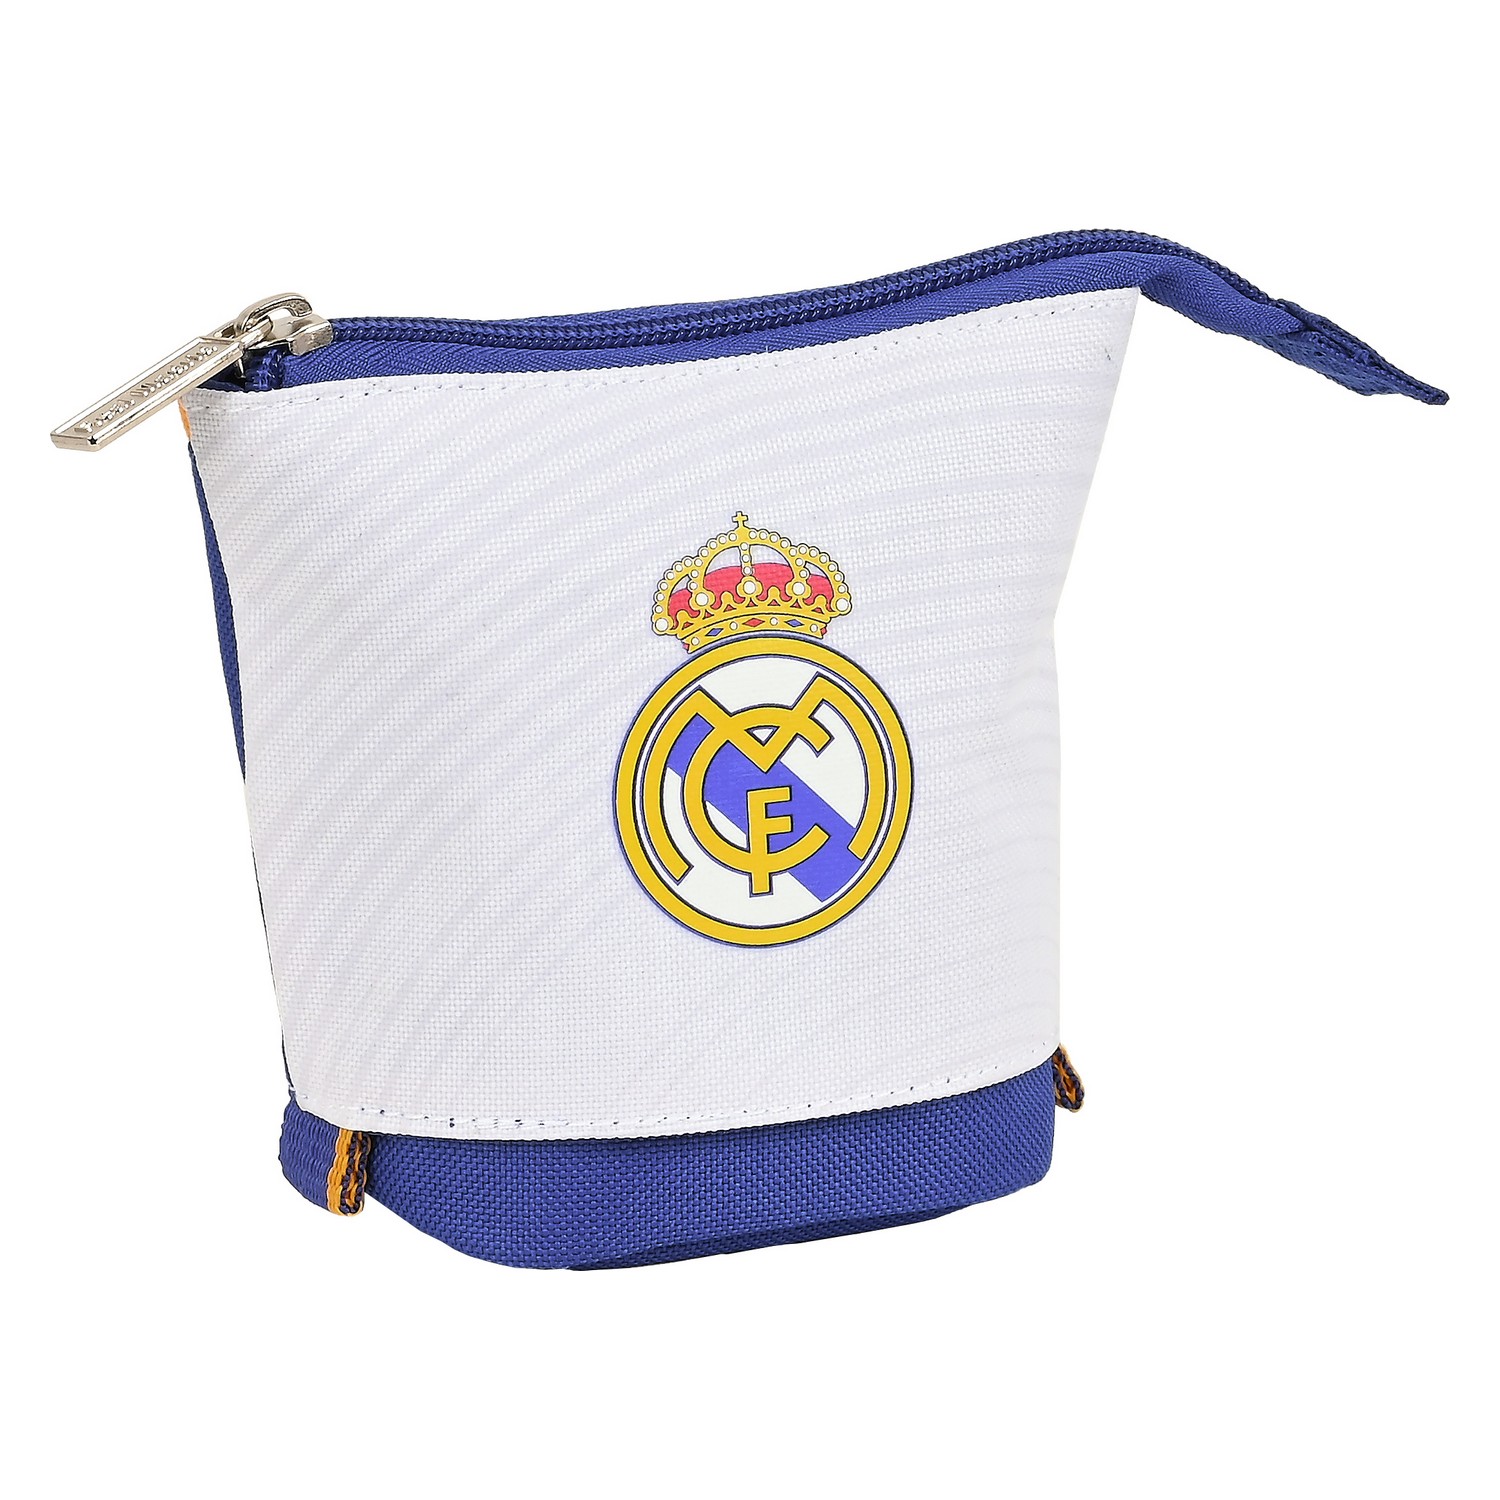 Carcasă Real Madrid C.F. Albastru Alb